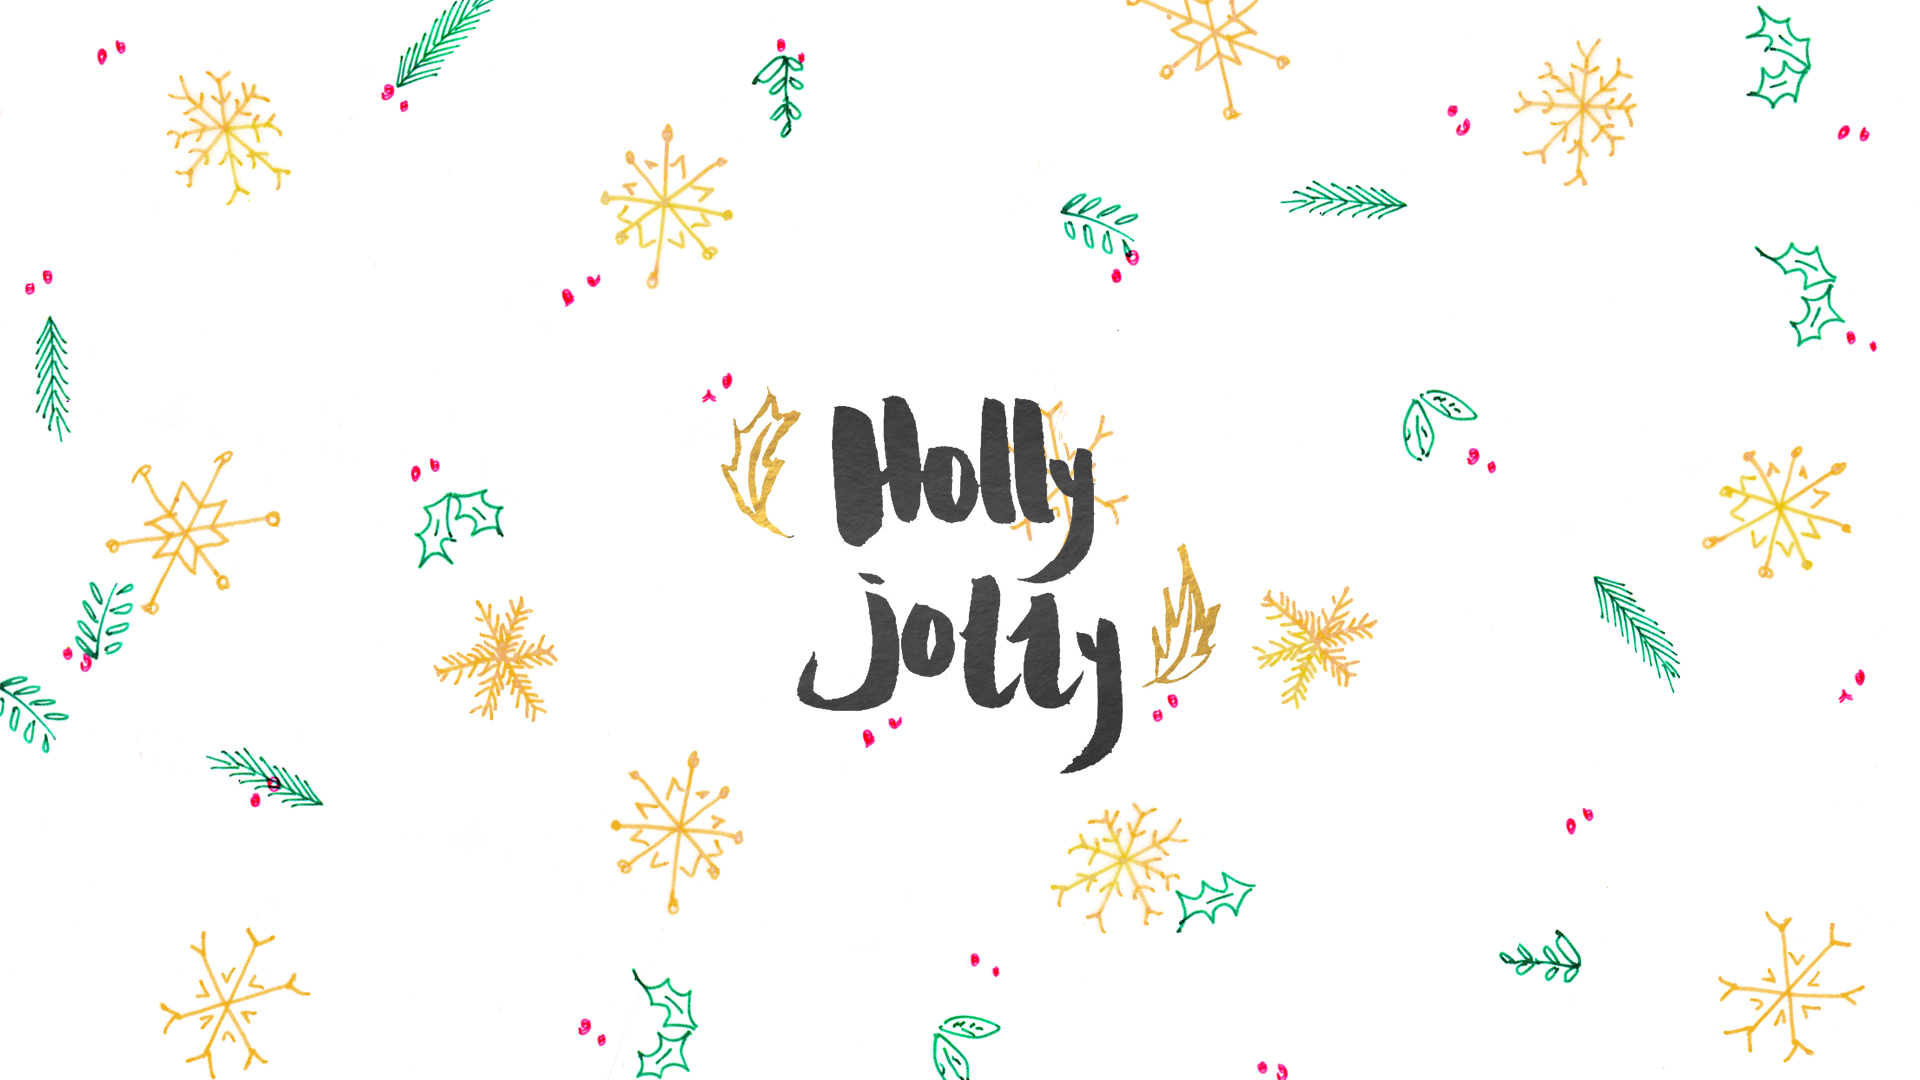 Logos_Holly